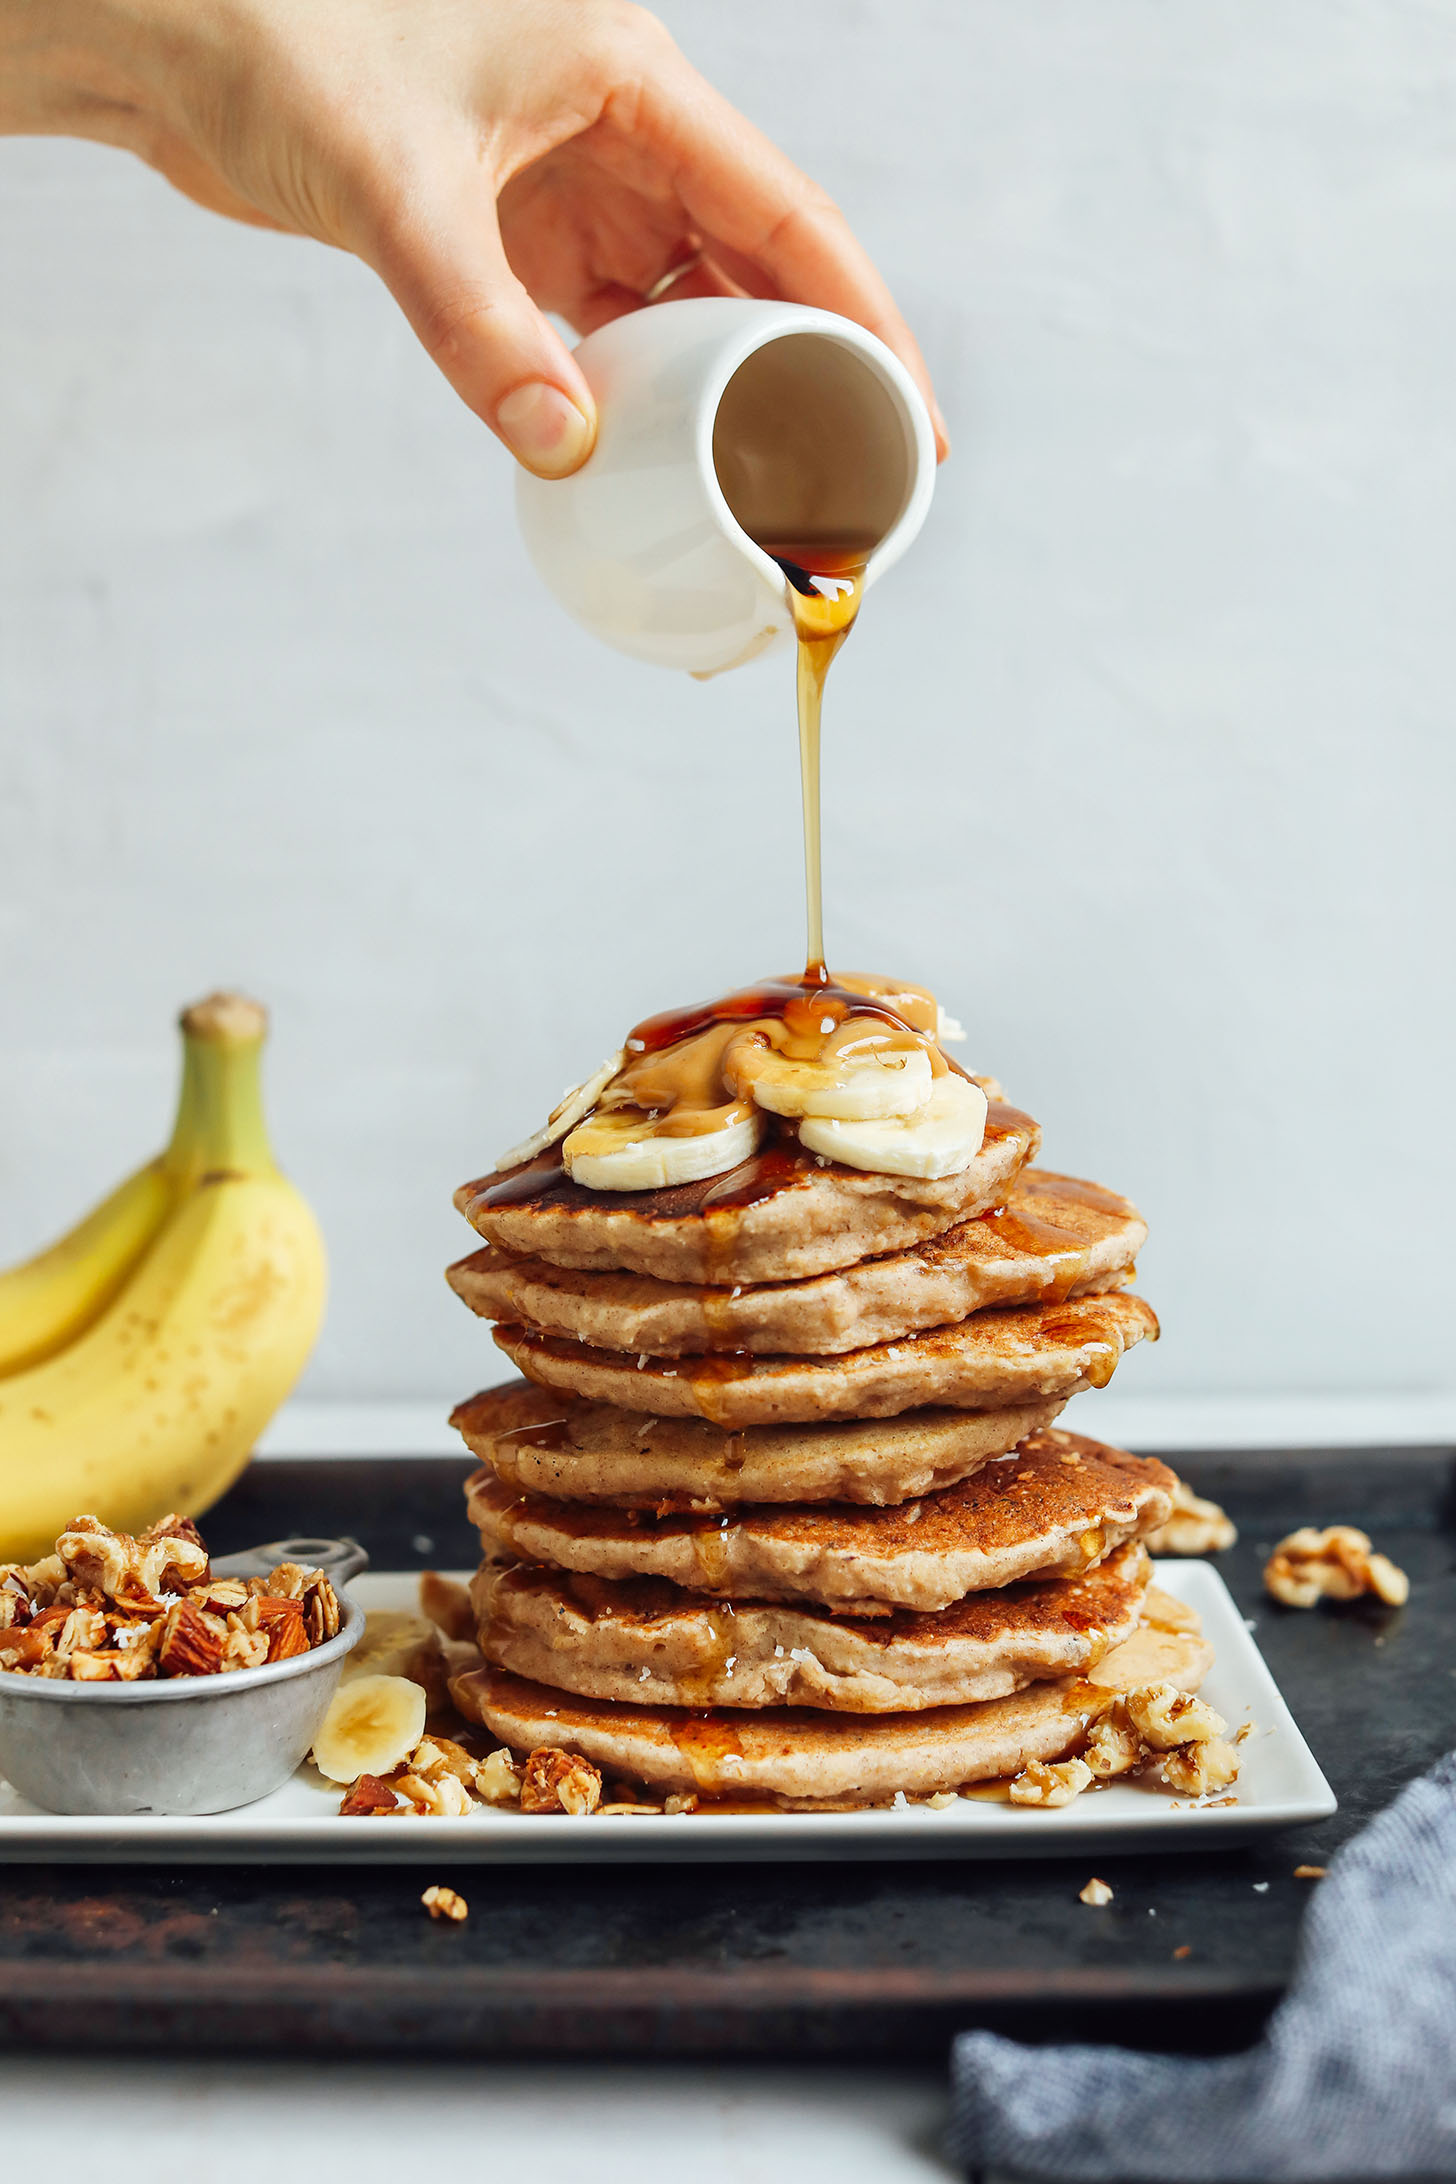 Pouring syrup onto fluffy delicious gluten-free vegan Banana Pancakes